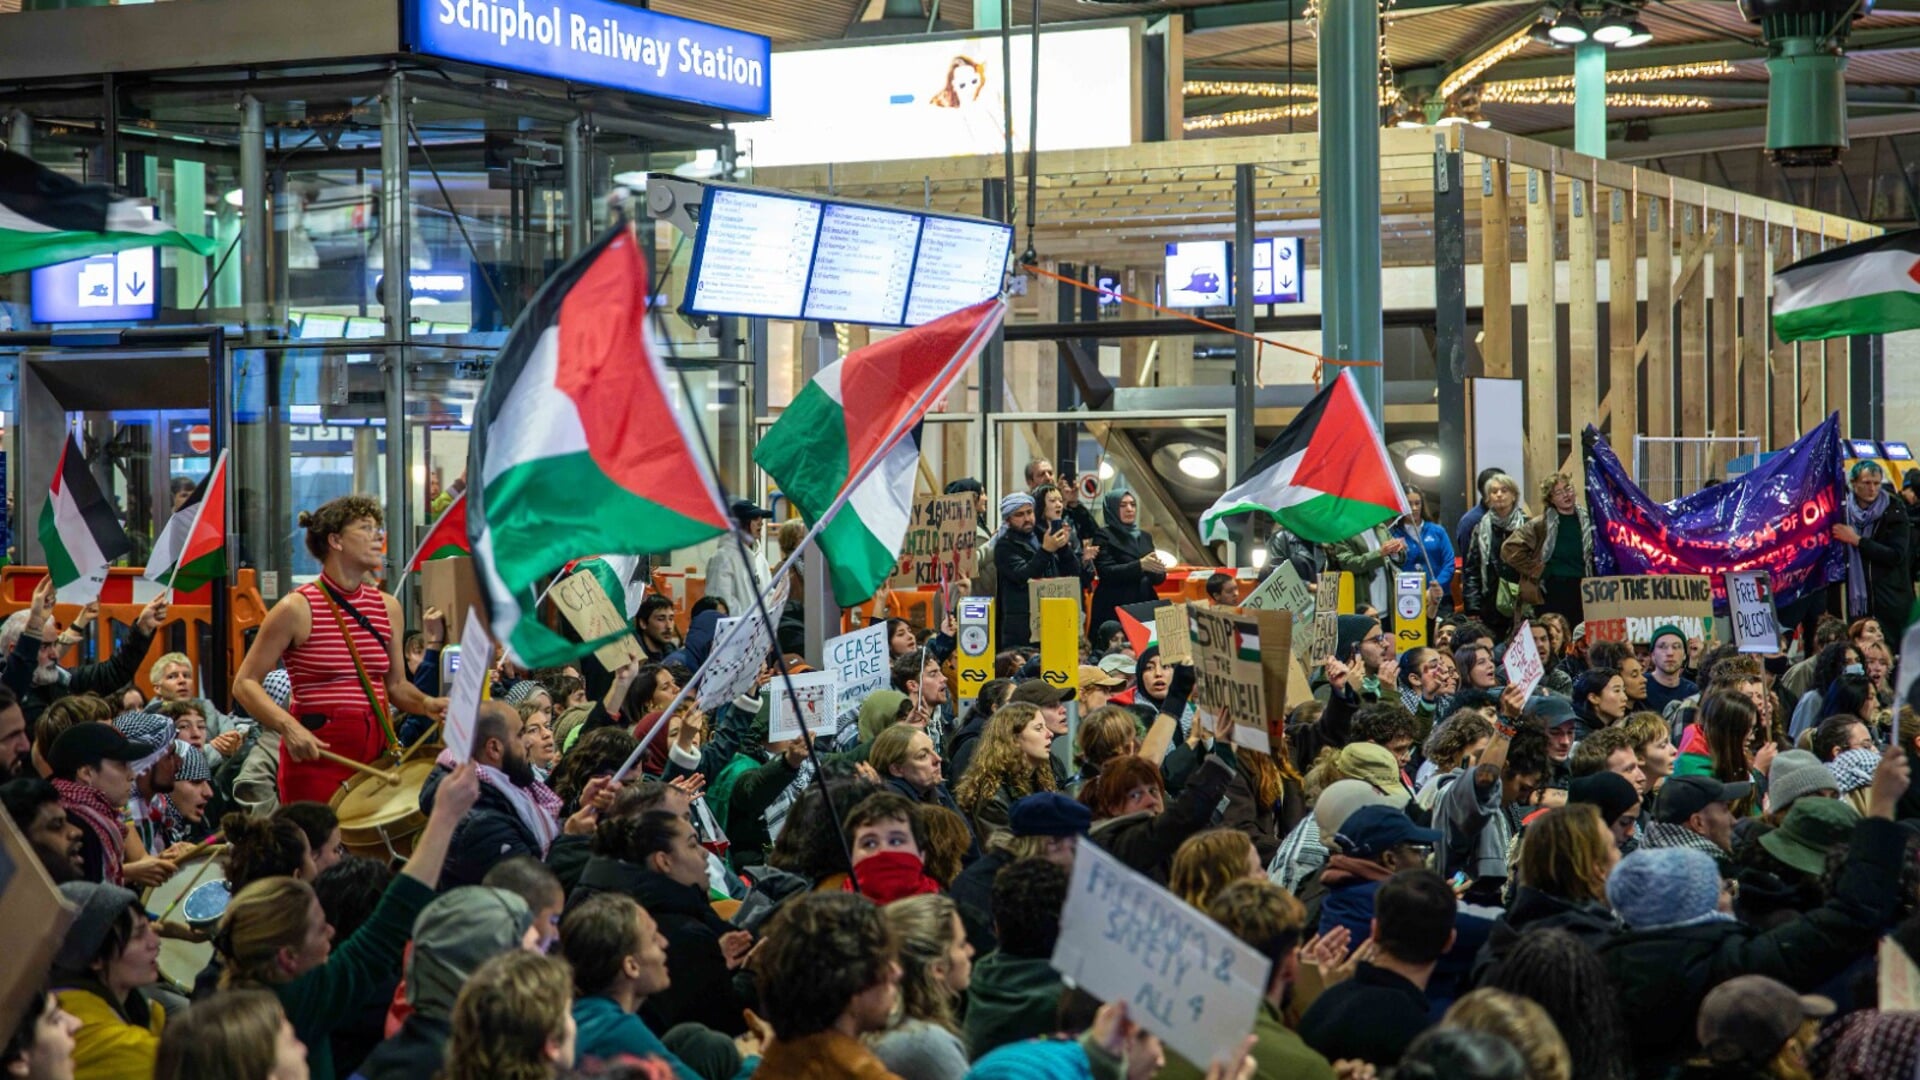 Op luchthaven Schiphol werd dinsdag een pro-Palestina manifestatie gehouden.